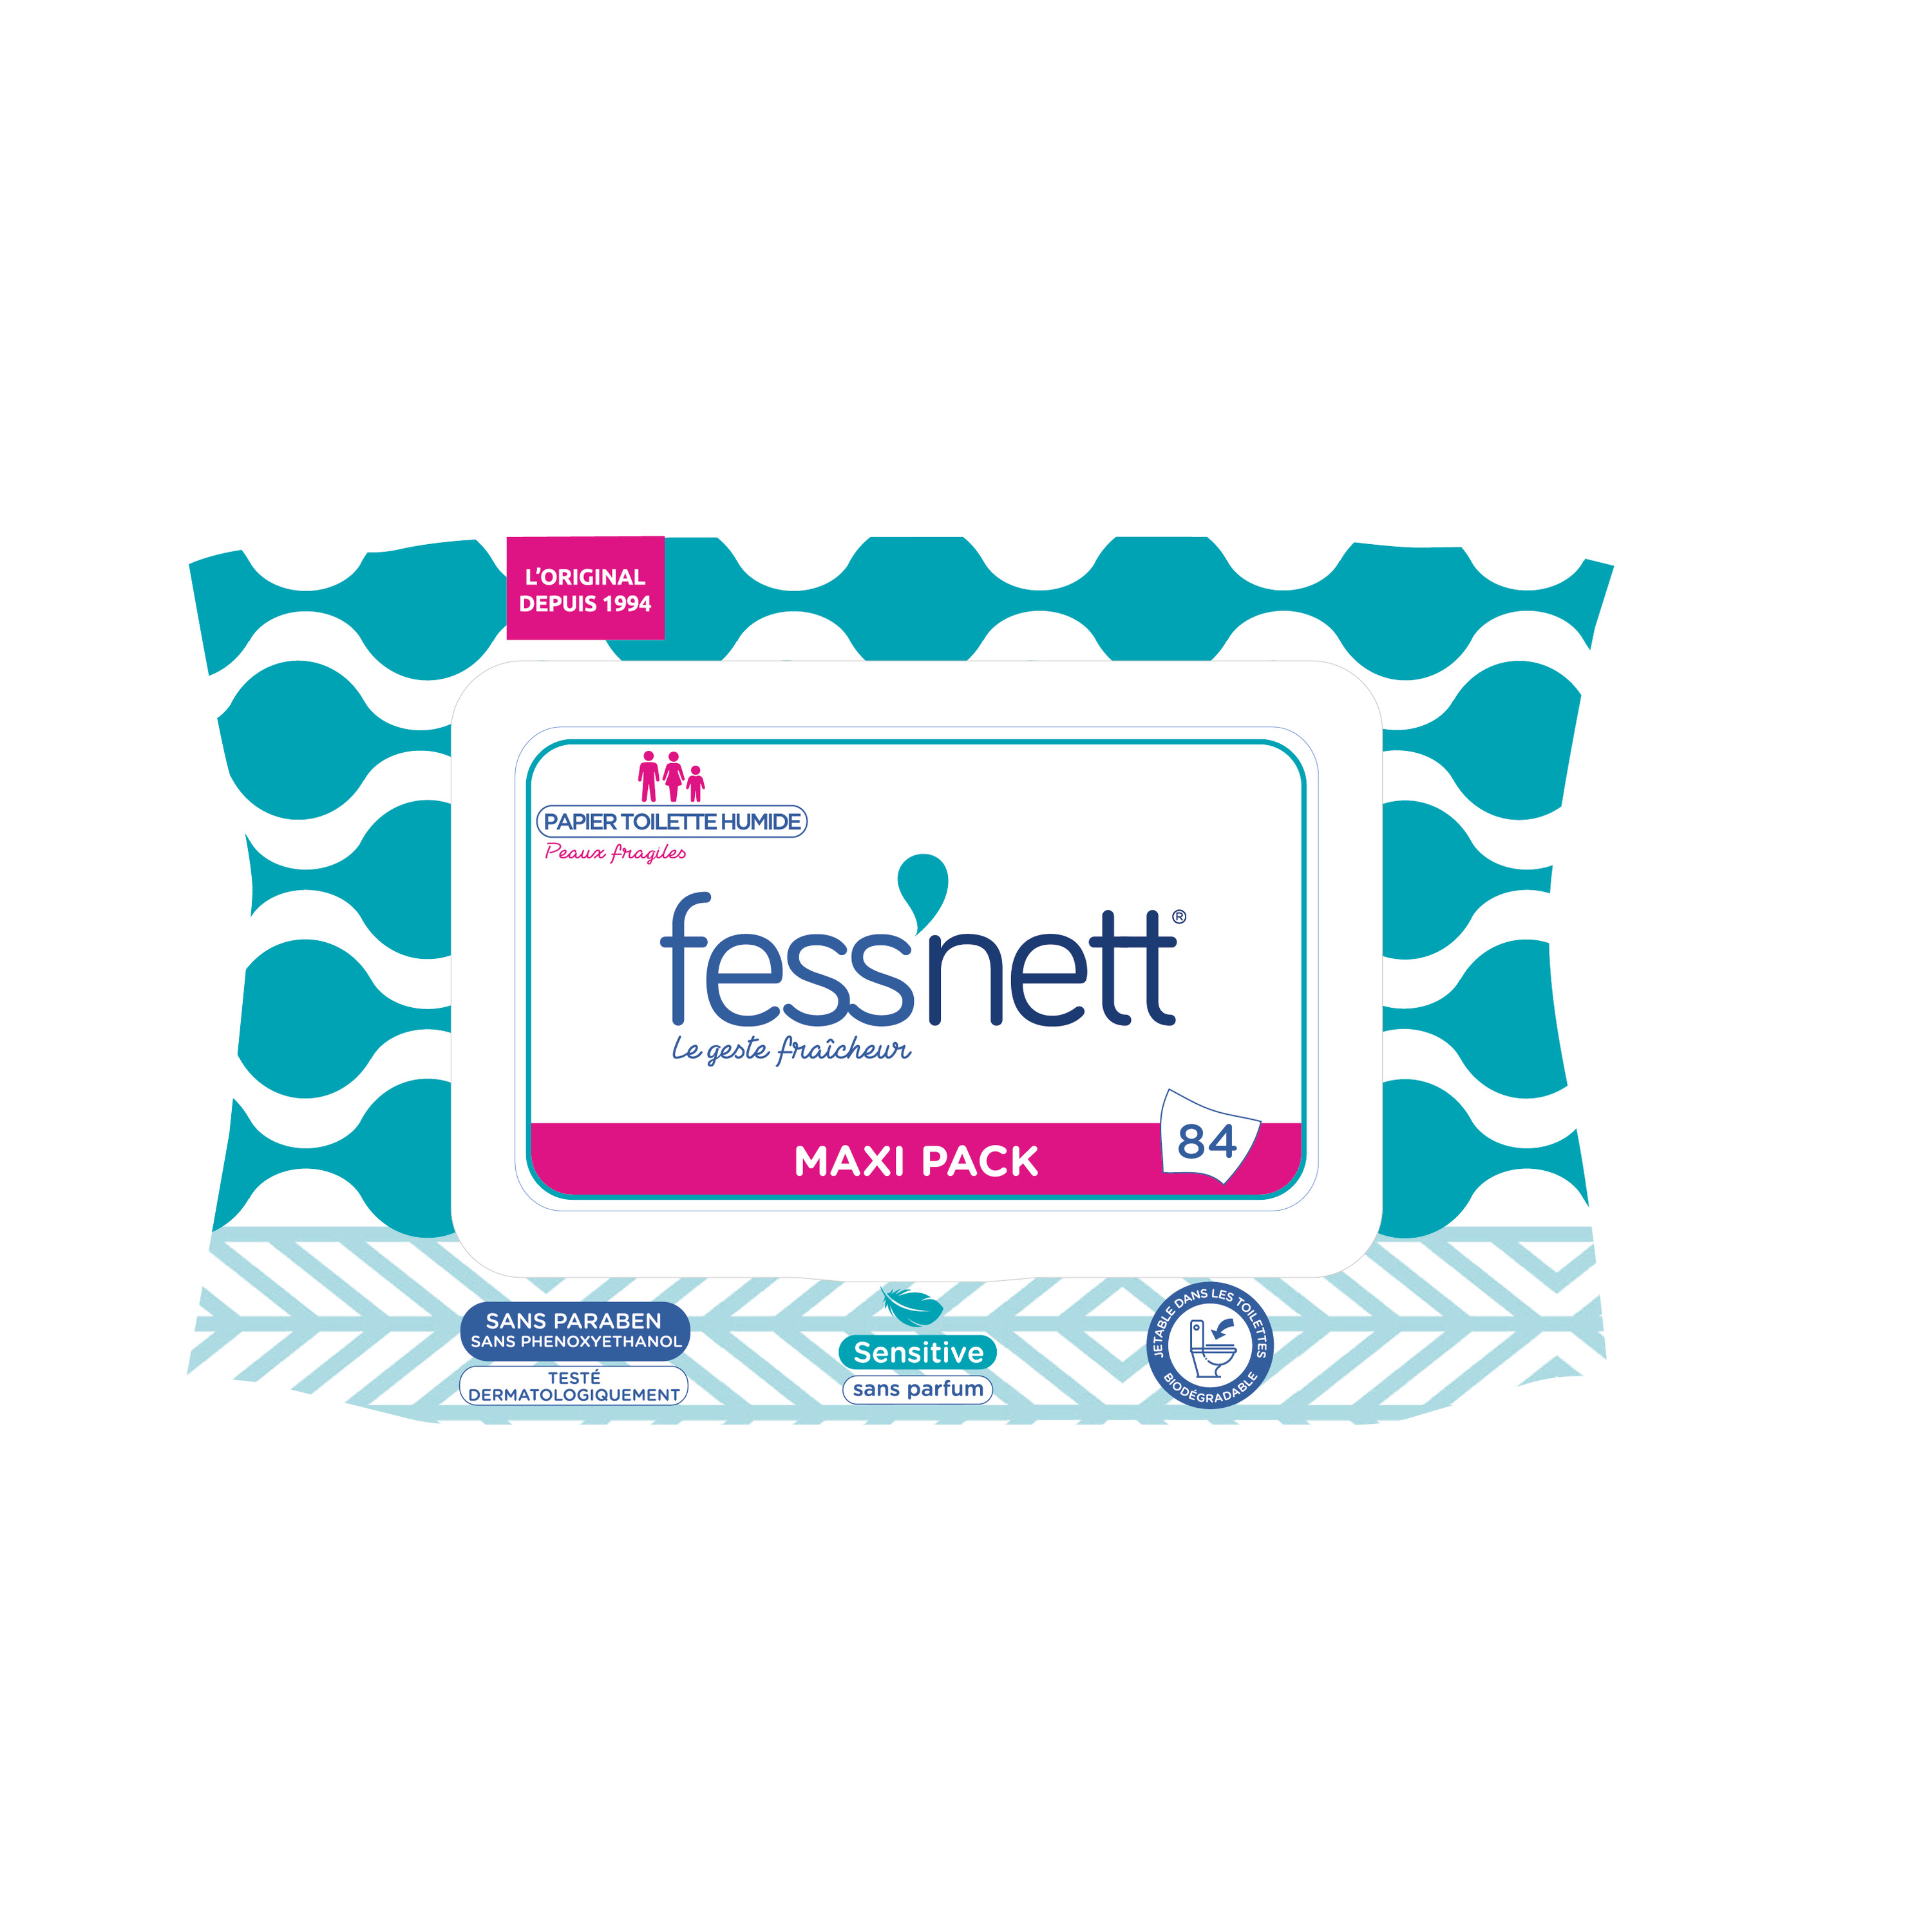 Fess'nett Fess'nett Papier Toilette Humide Peaux Normales 50 Lingettes Vert  Ylang (lot de 6) 